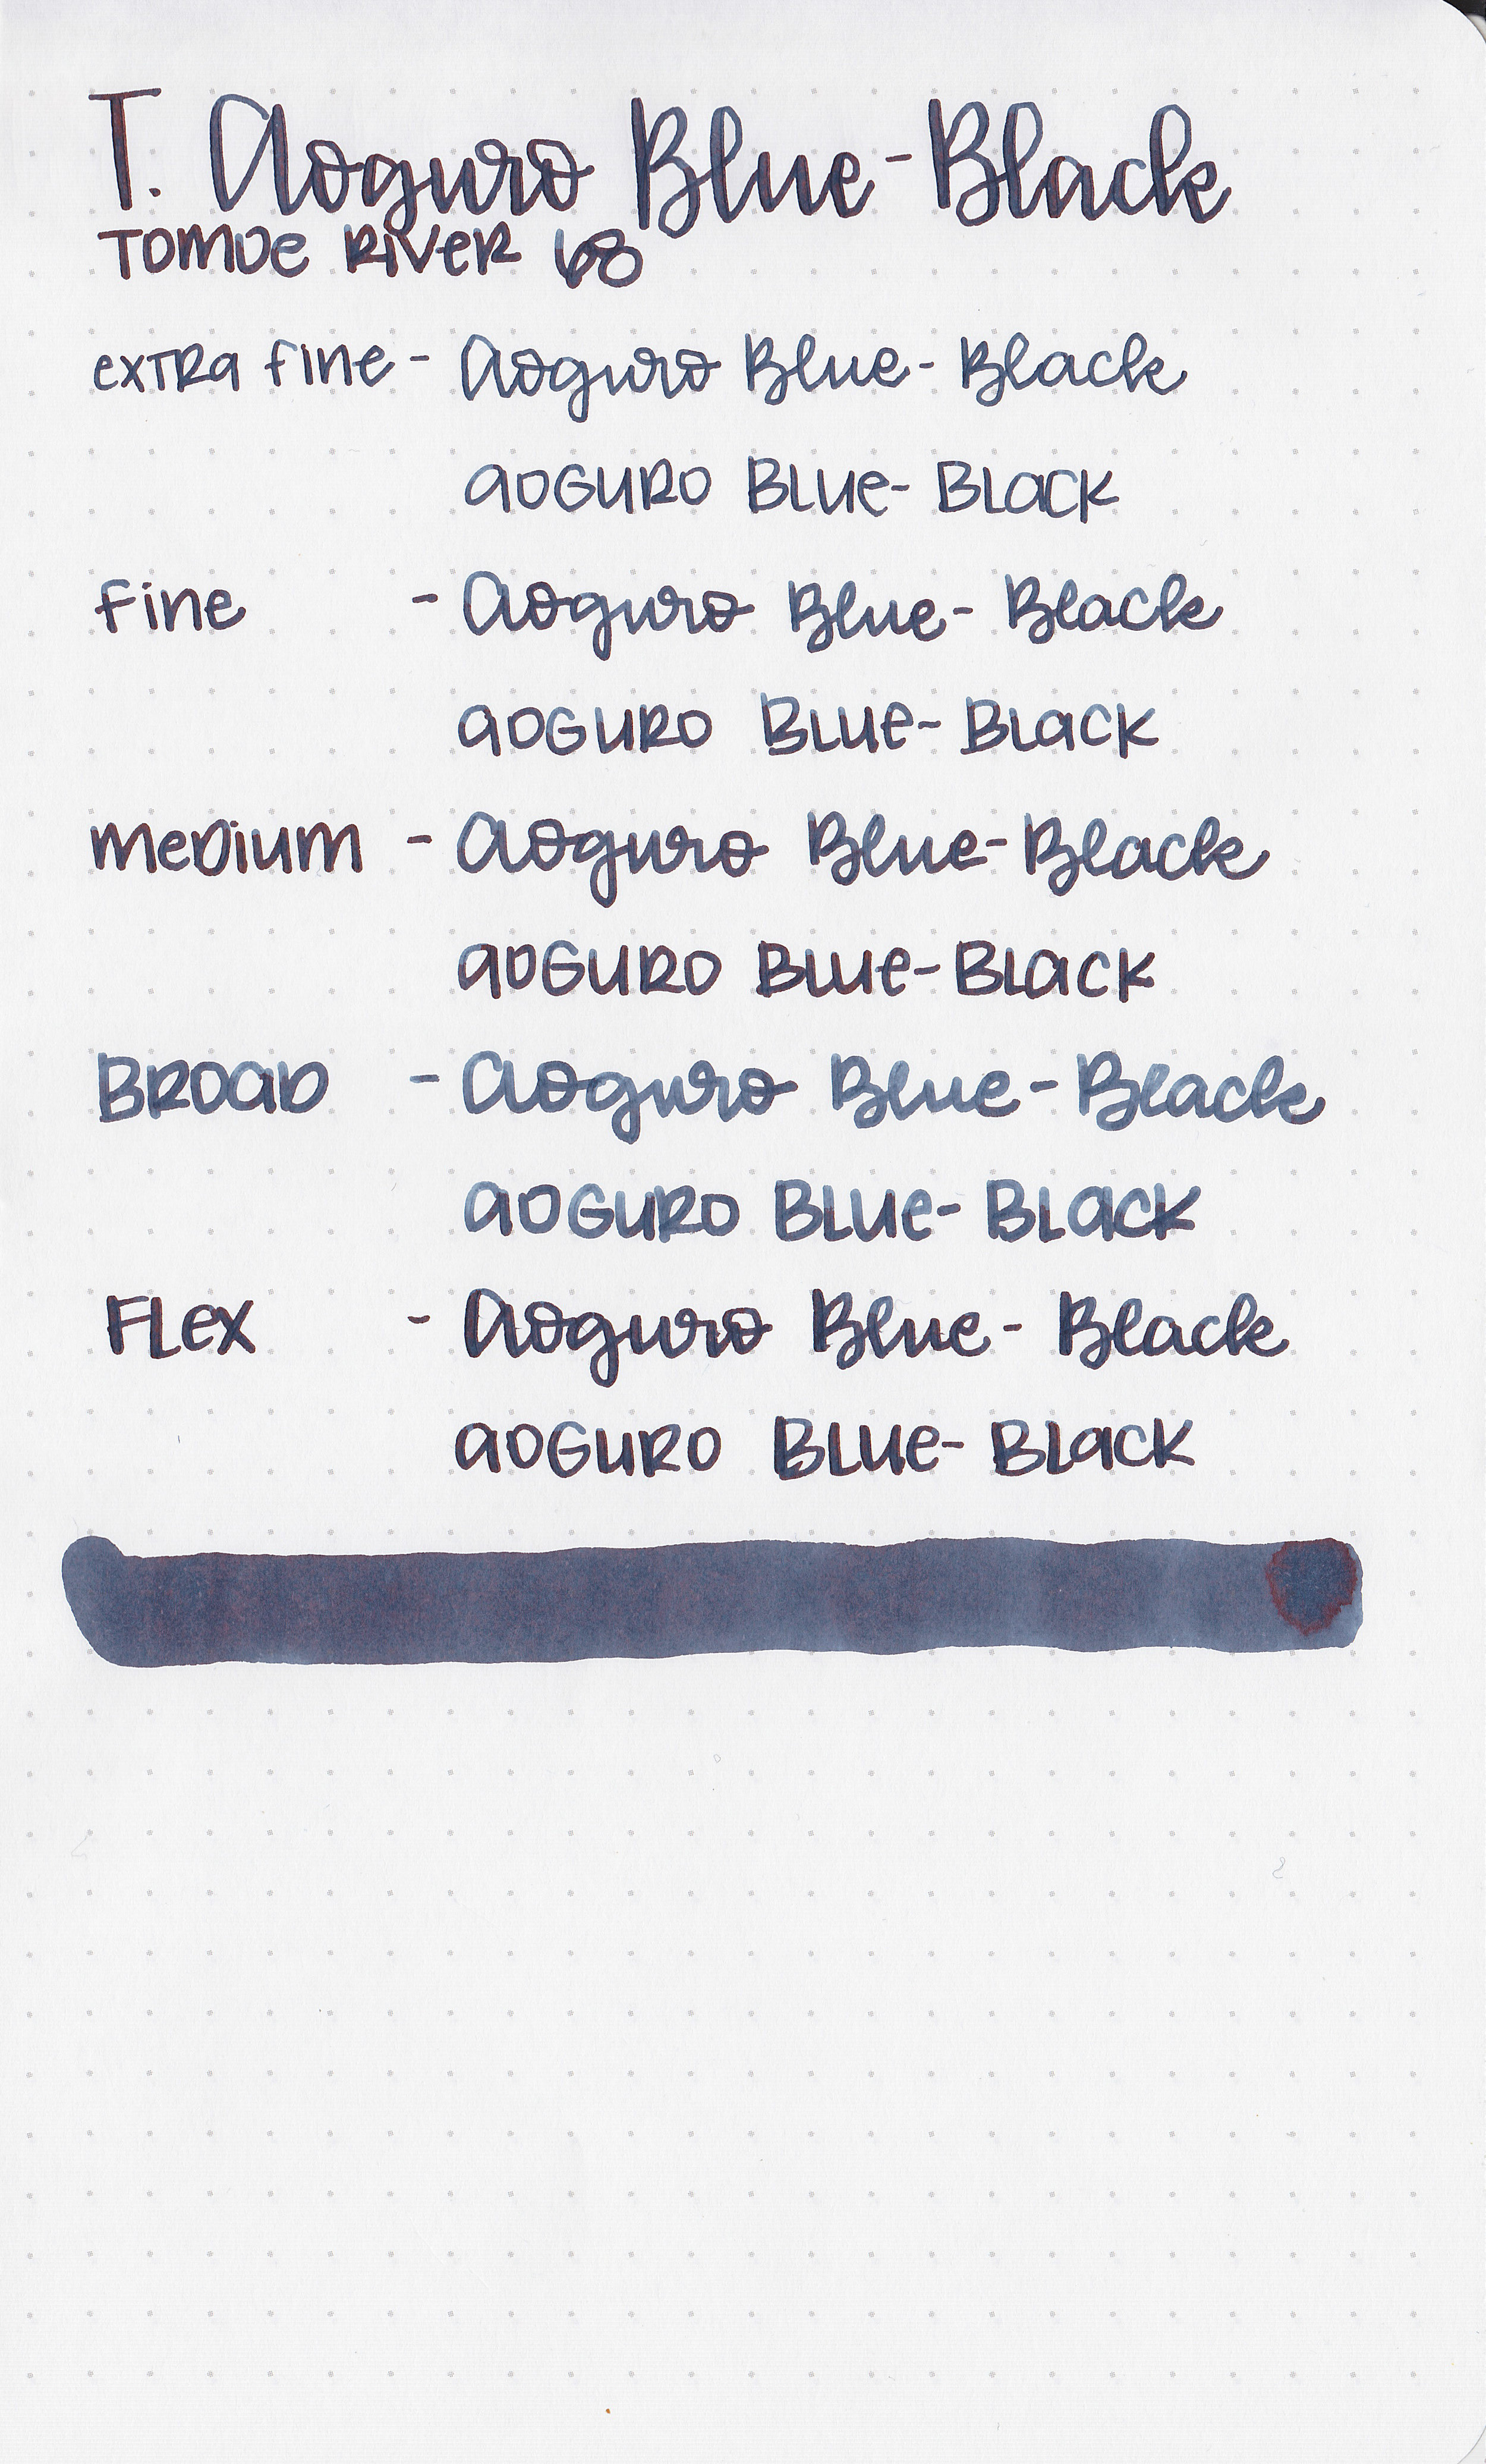 tac-aoguro-blue-black-9.jpg